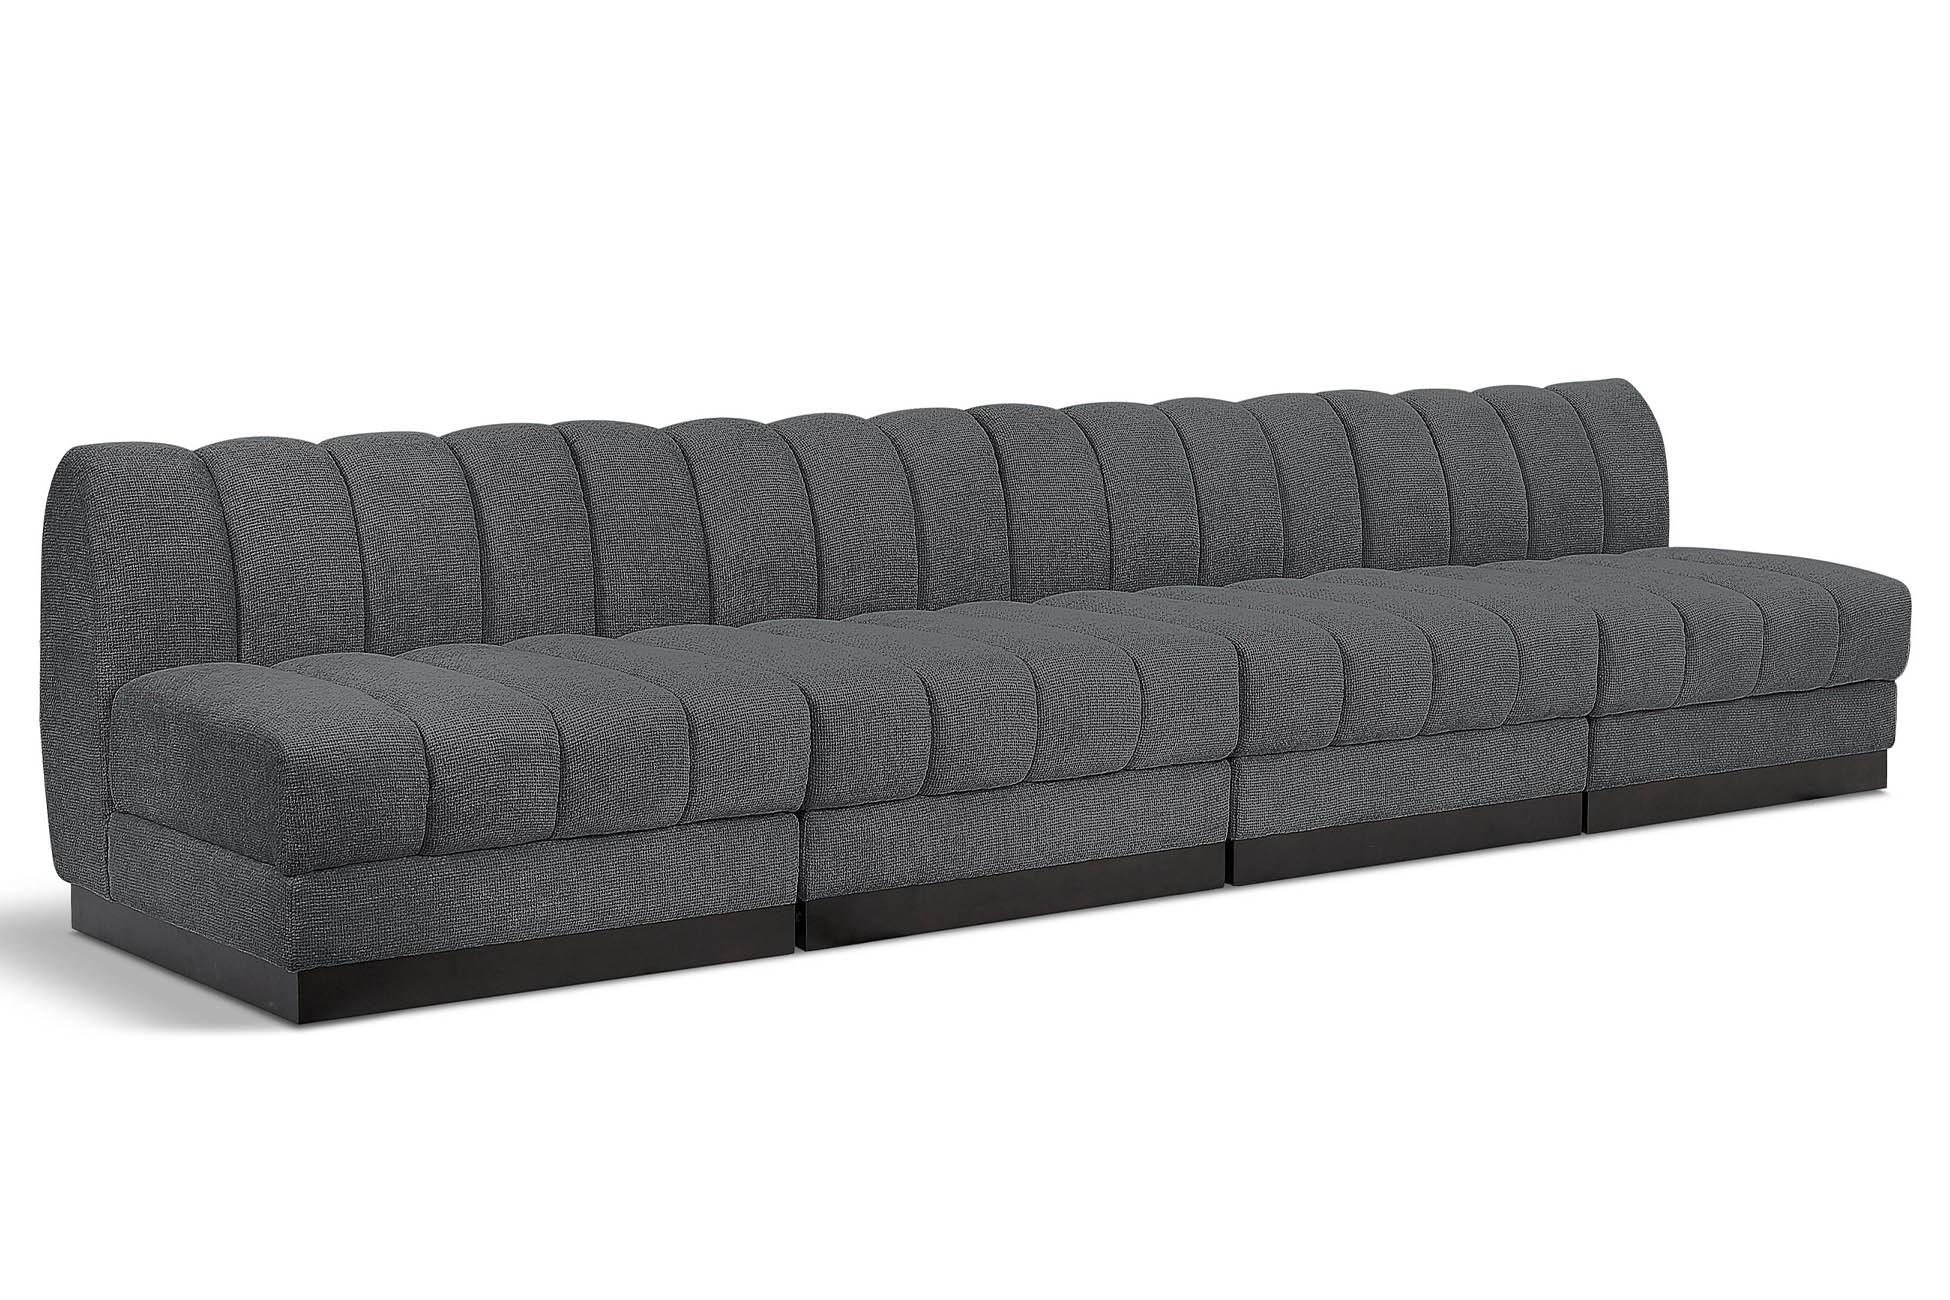 Contemporary, Modern Modular Sofa QUINN 124Grey-S128 124Grey-S128 in Gray Chenille